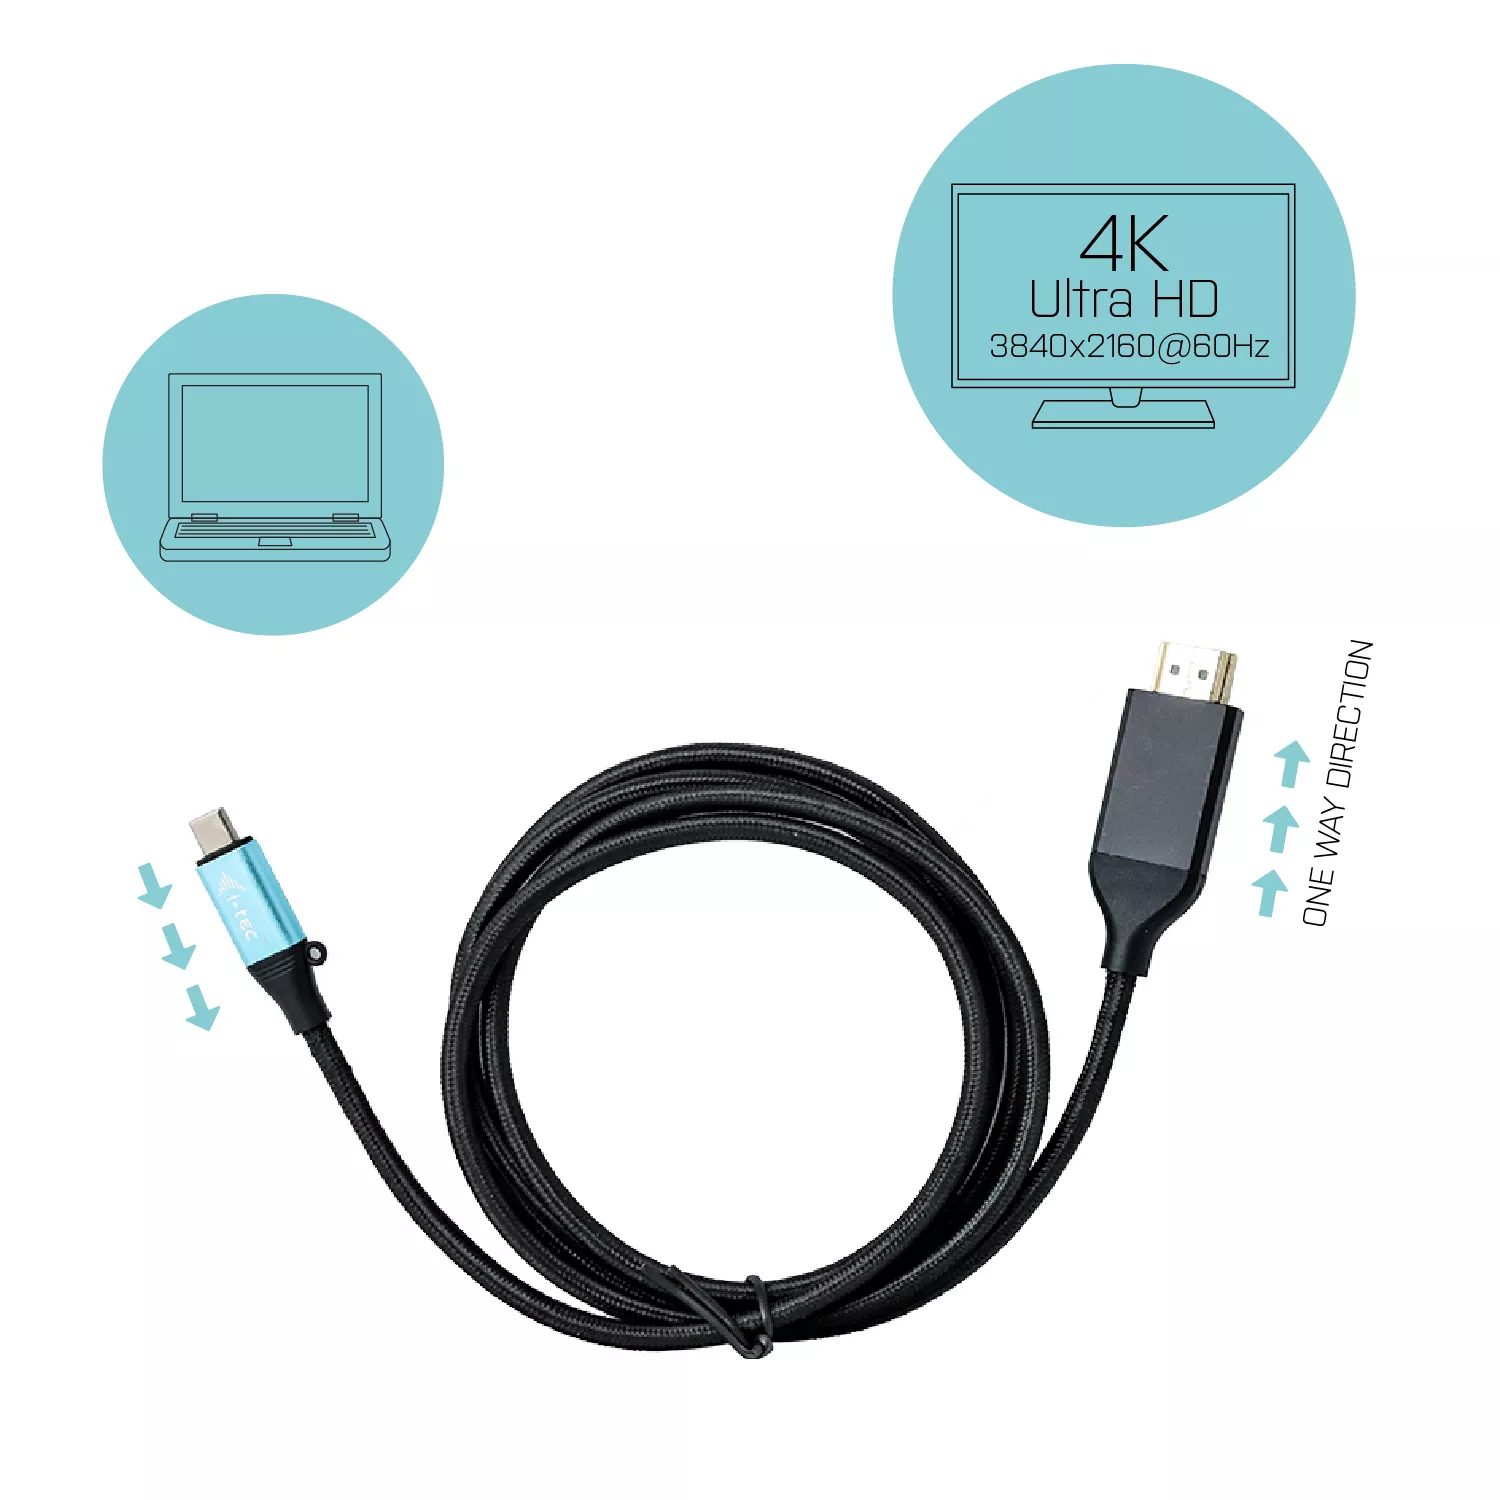 Vente I-TEC USB C HDMI Cable Adapter 4K 60Hz i-tec au meilleur prix - visuel 4